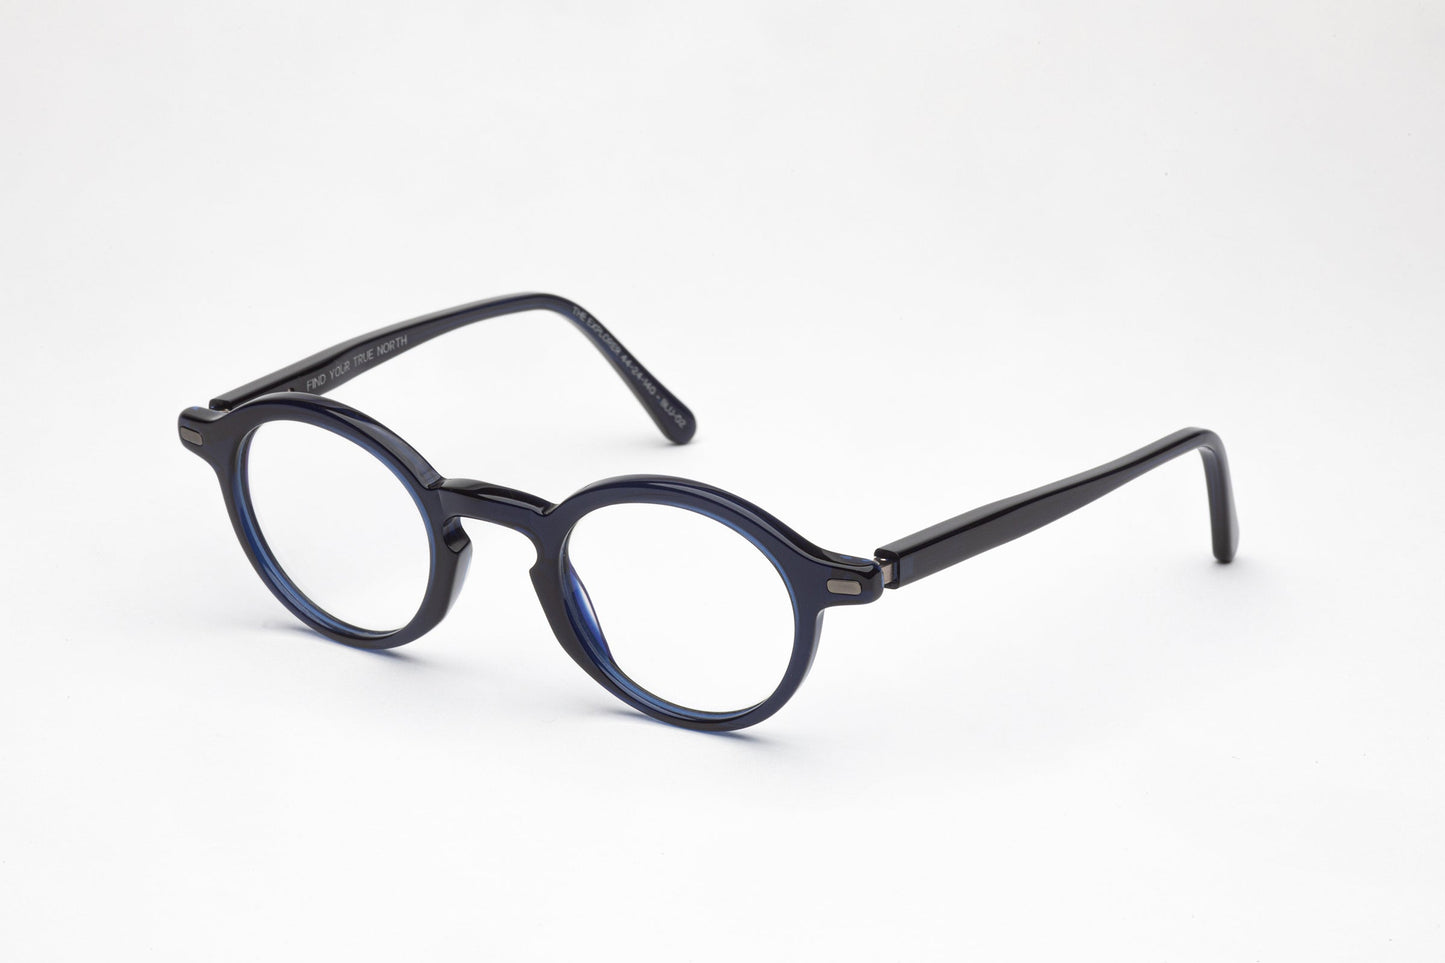 Angled View - The Explorer 2 | Blue Frame Designer Prescription Glasses with Low Nose Bridge 